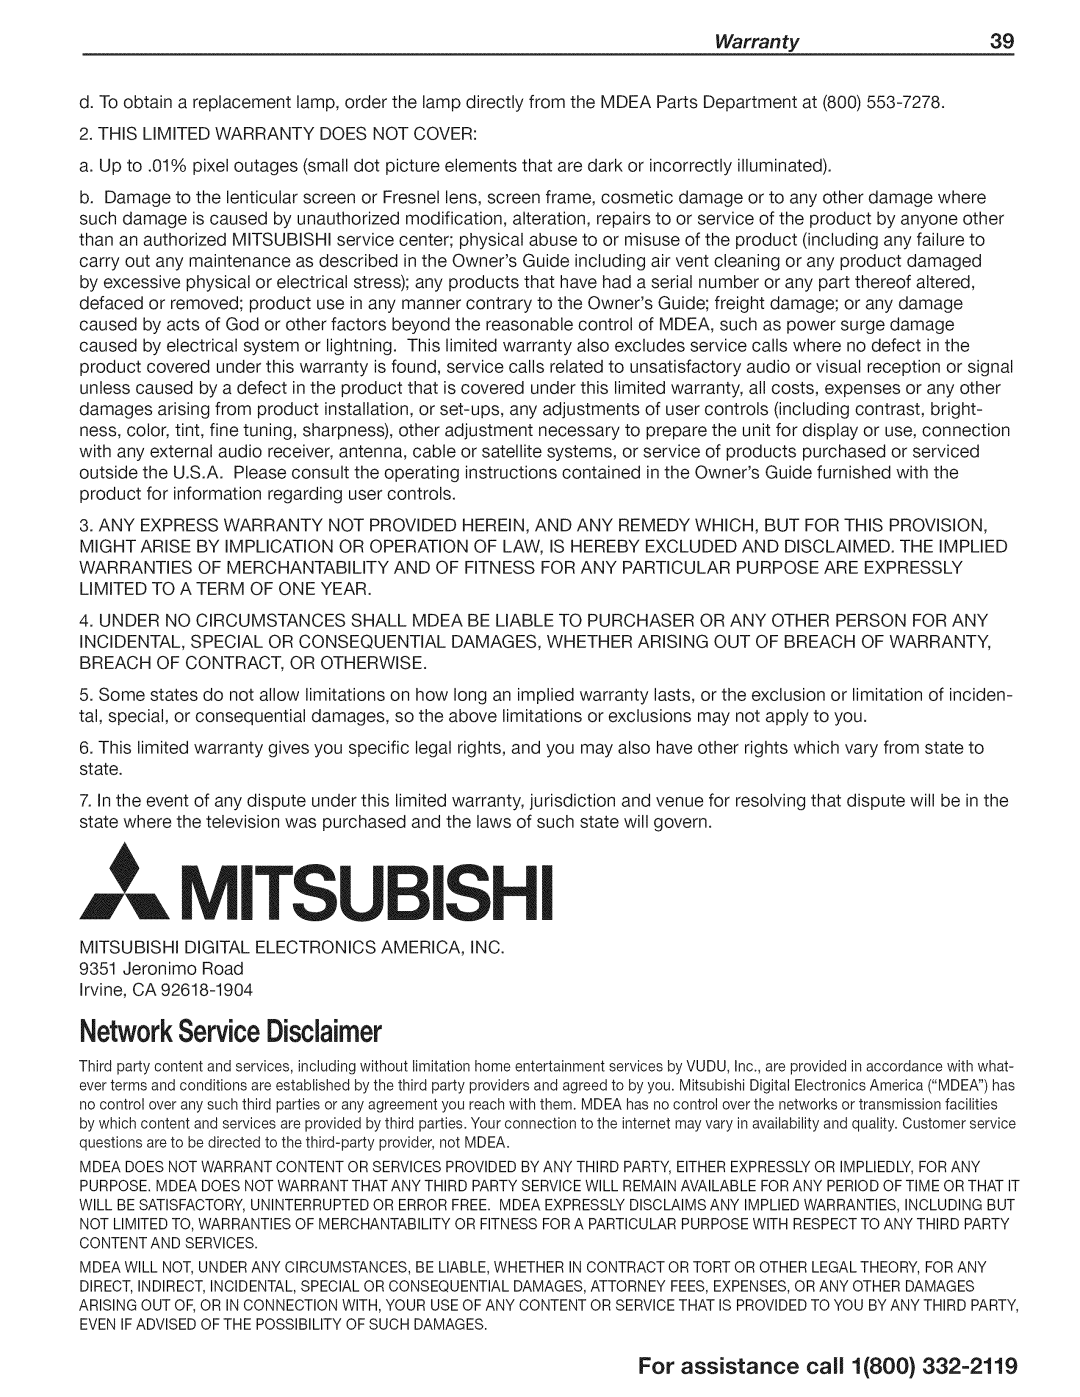 Mitsubishi Electronics 838, 738 manual NetworkServiceDisclaimer, Mitsubishi, For assistance call 1800 